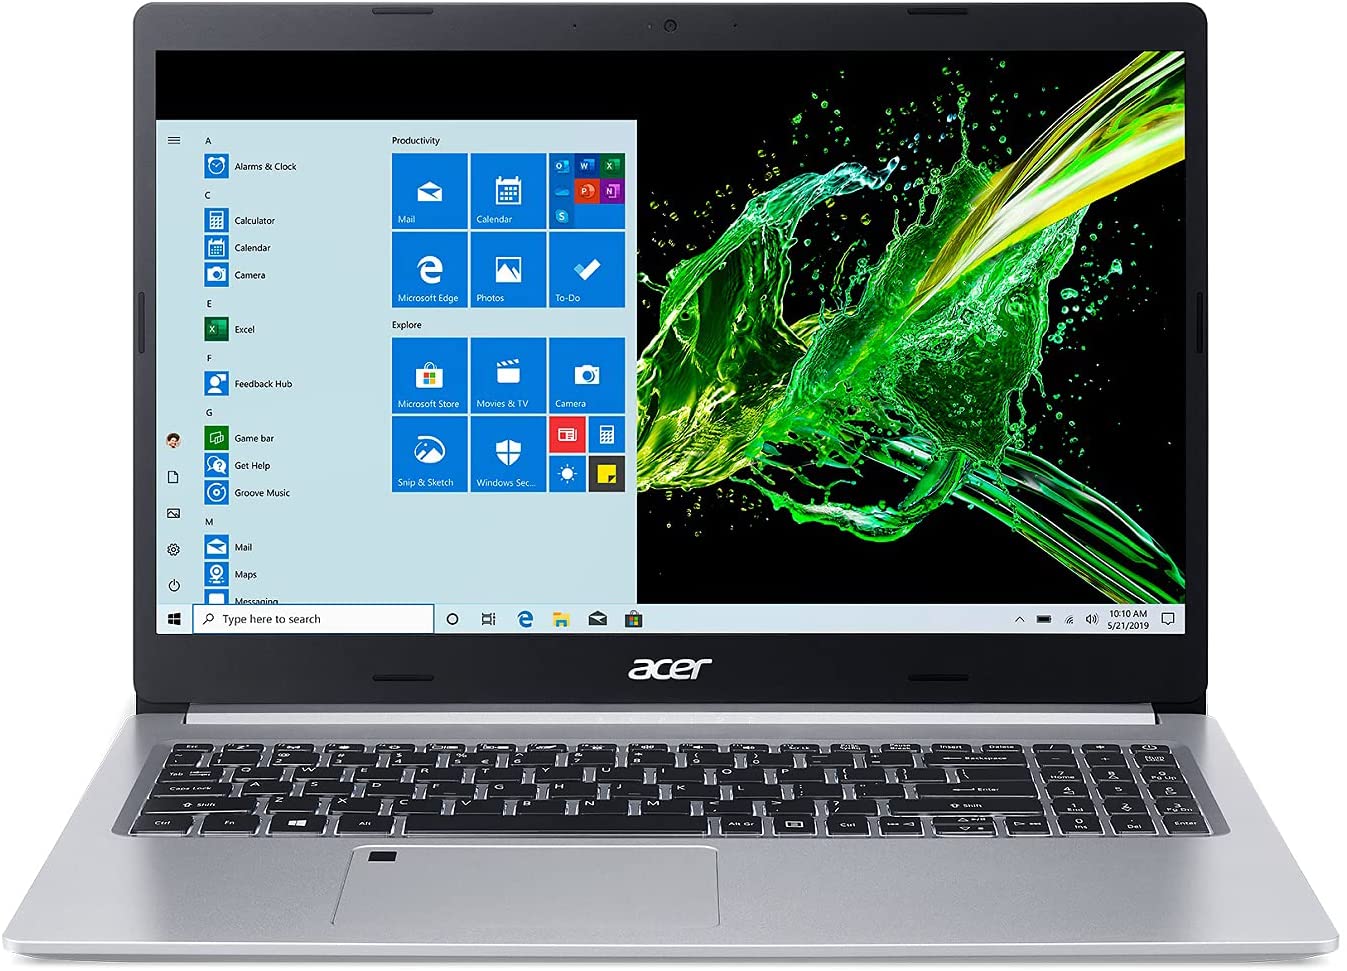 Acer Aspire 5 A515-55-56VK